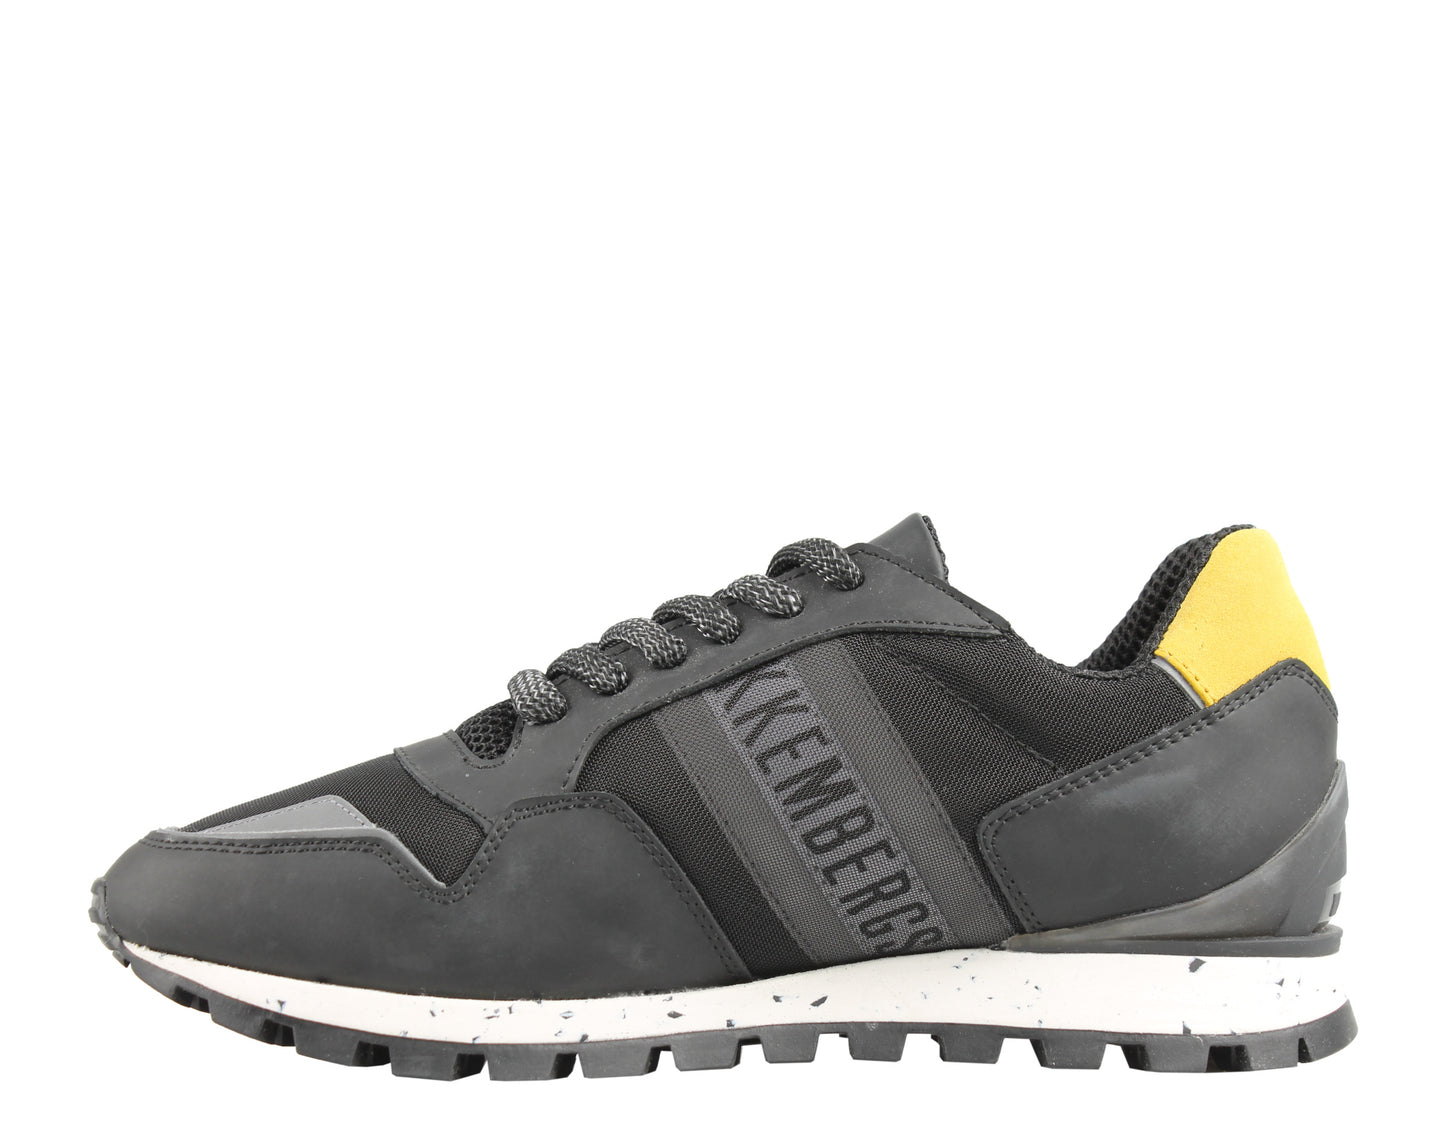 Bikkembergs FEND-ER 2078 Low Black/Yellow Men's Casual Shoes BKE108970